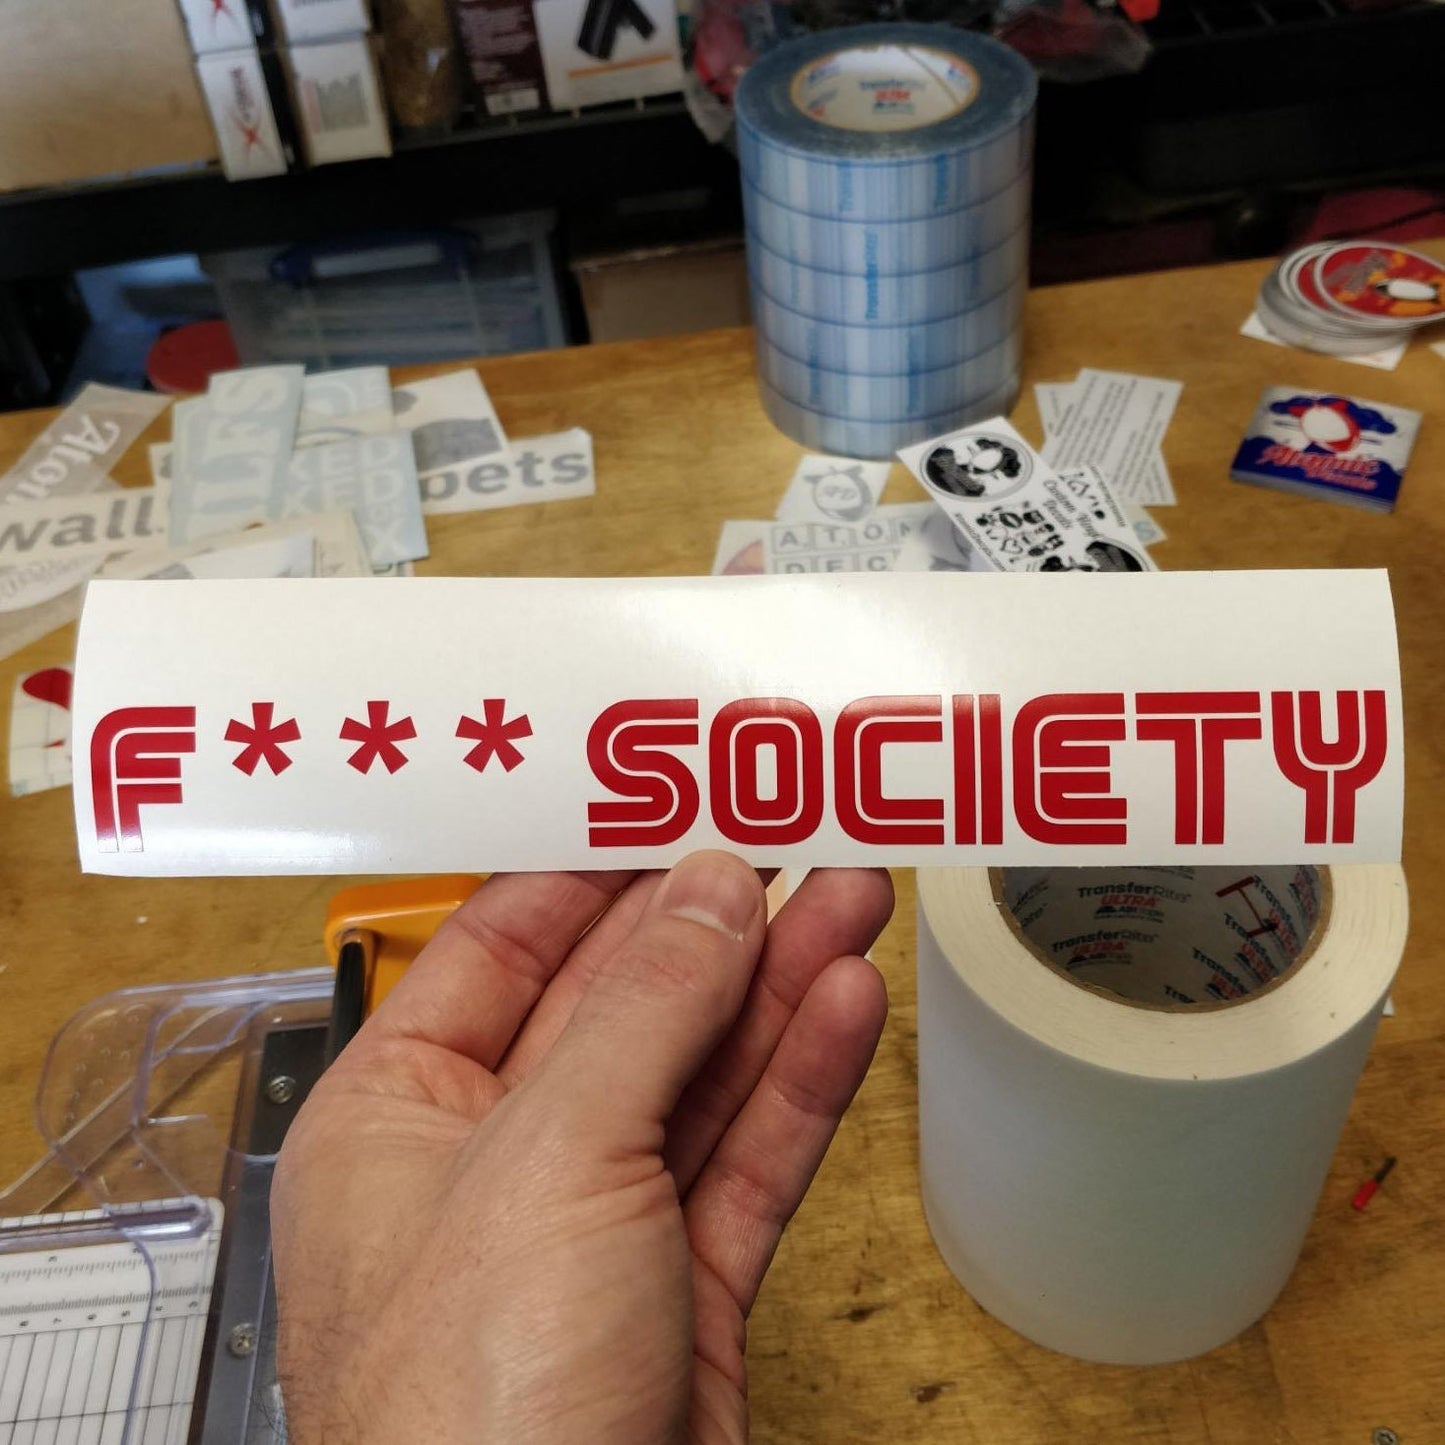 F Society Decal